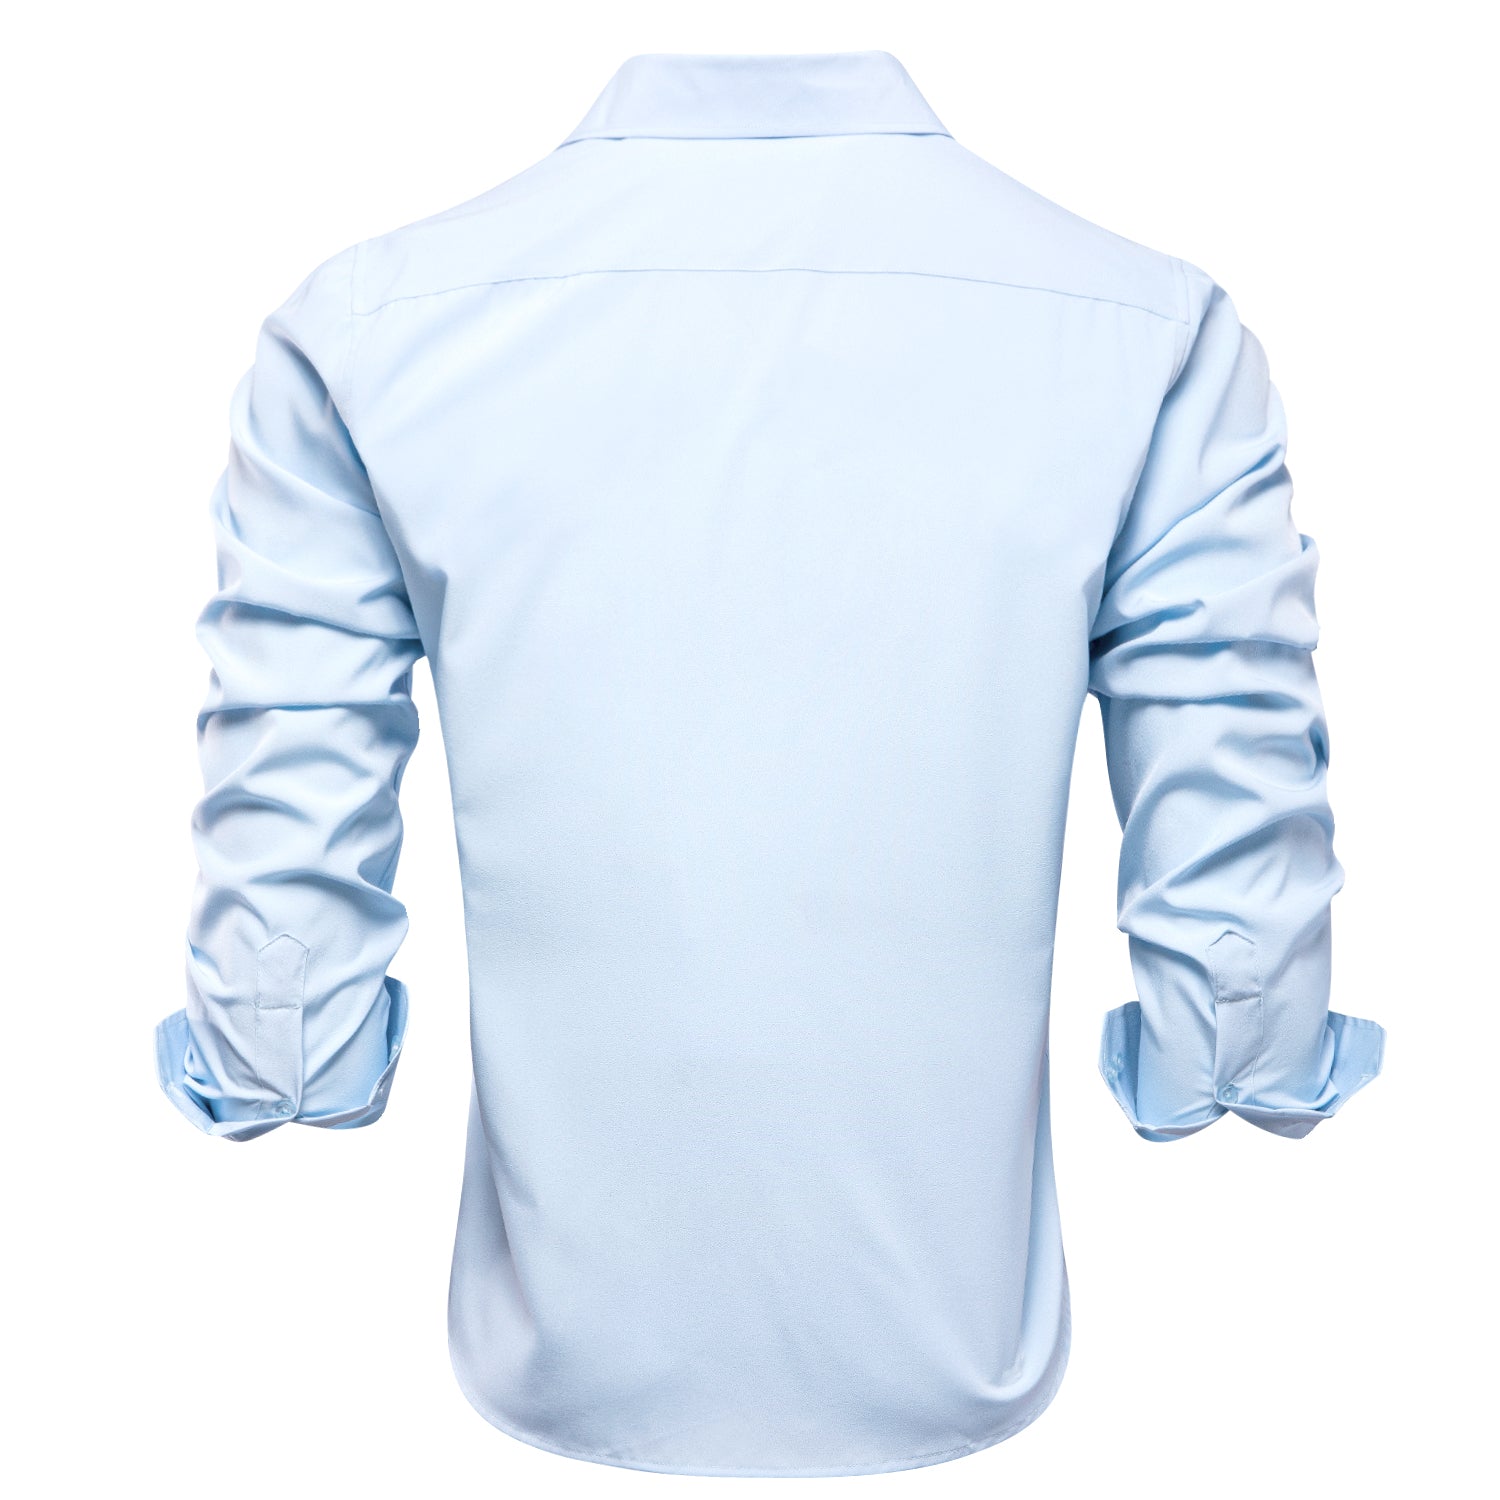 New Light Blue Solid Stretch Men's Long Sleeve Shirt